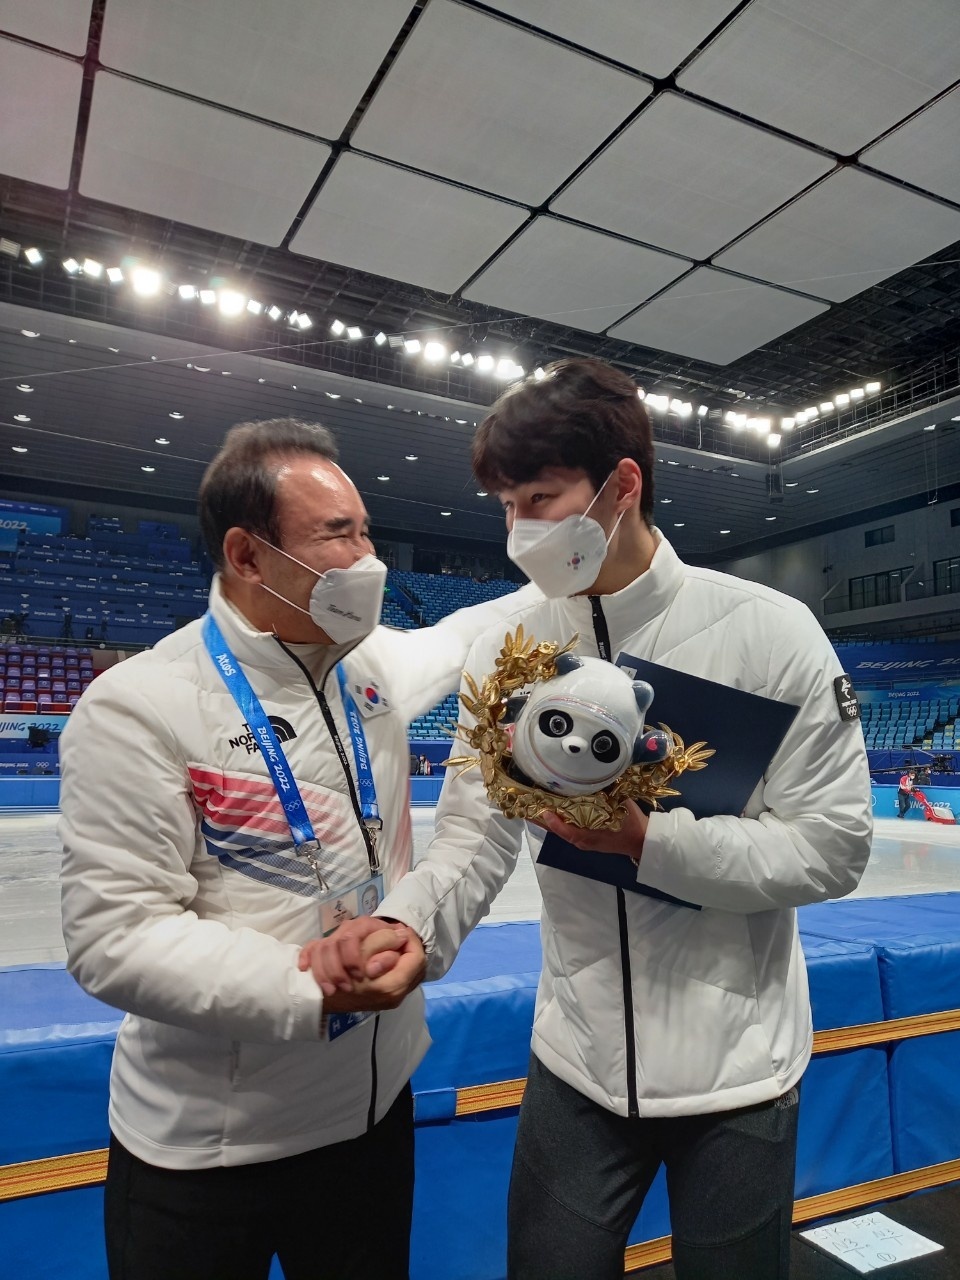 BBQ Genesis CEO Yoon Hong-geun poses with short track speedskating medalist Hwang Dae-heon on Feb. 9 at the Olympics speedskating rink in Beijing. (BBQ Genesis)